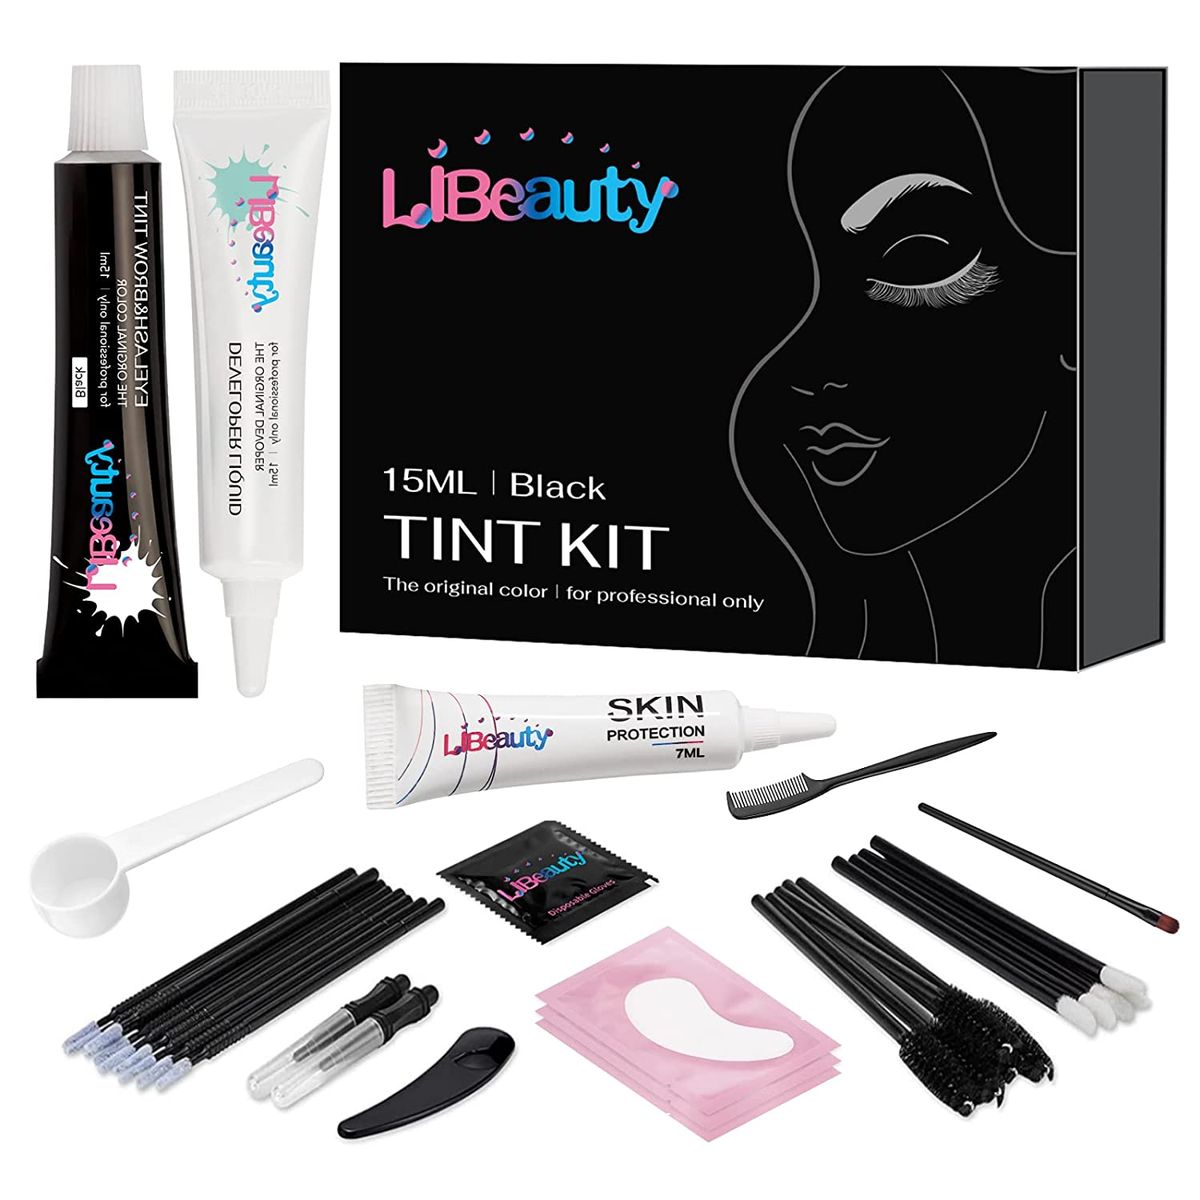 Libeauty Lash Kit Brow Kit Lasting 6-8 Weeks | Shop Today. Get it ...